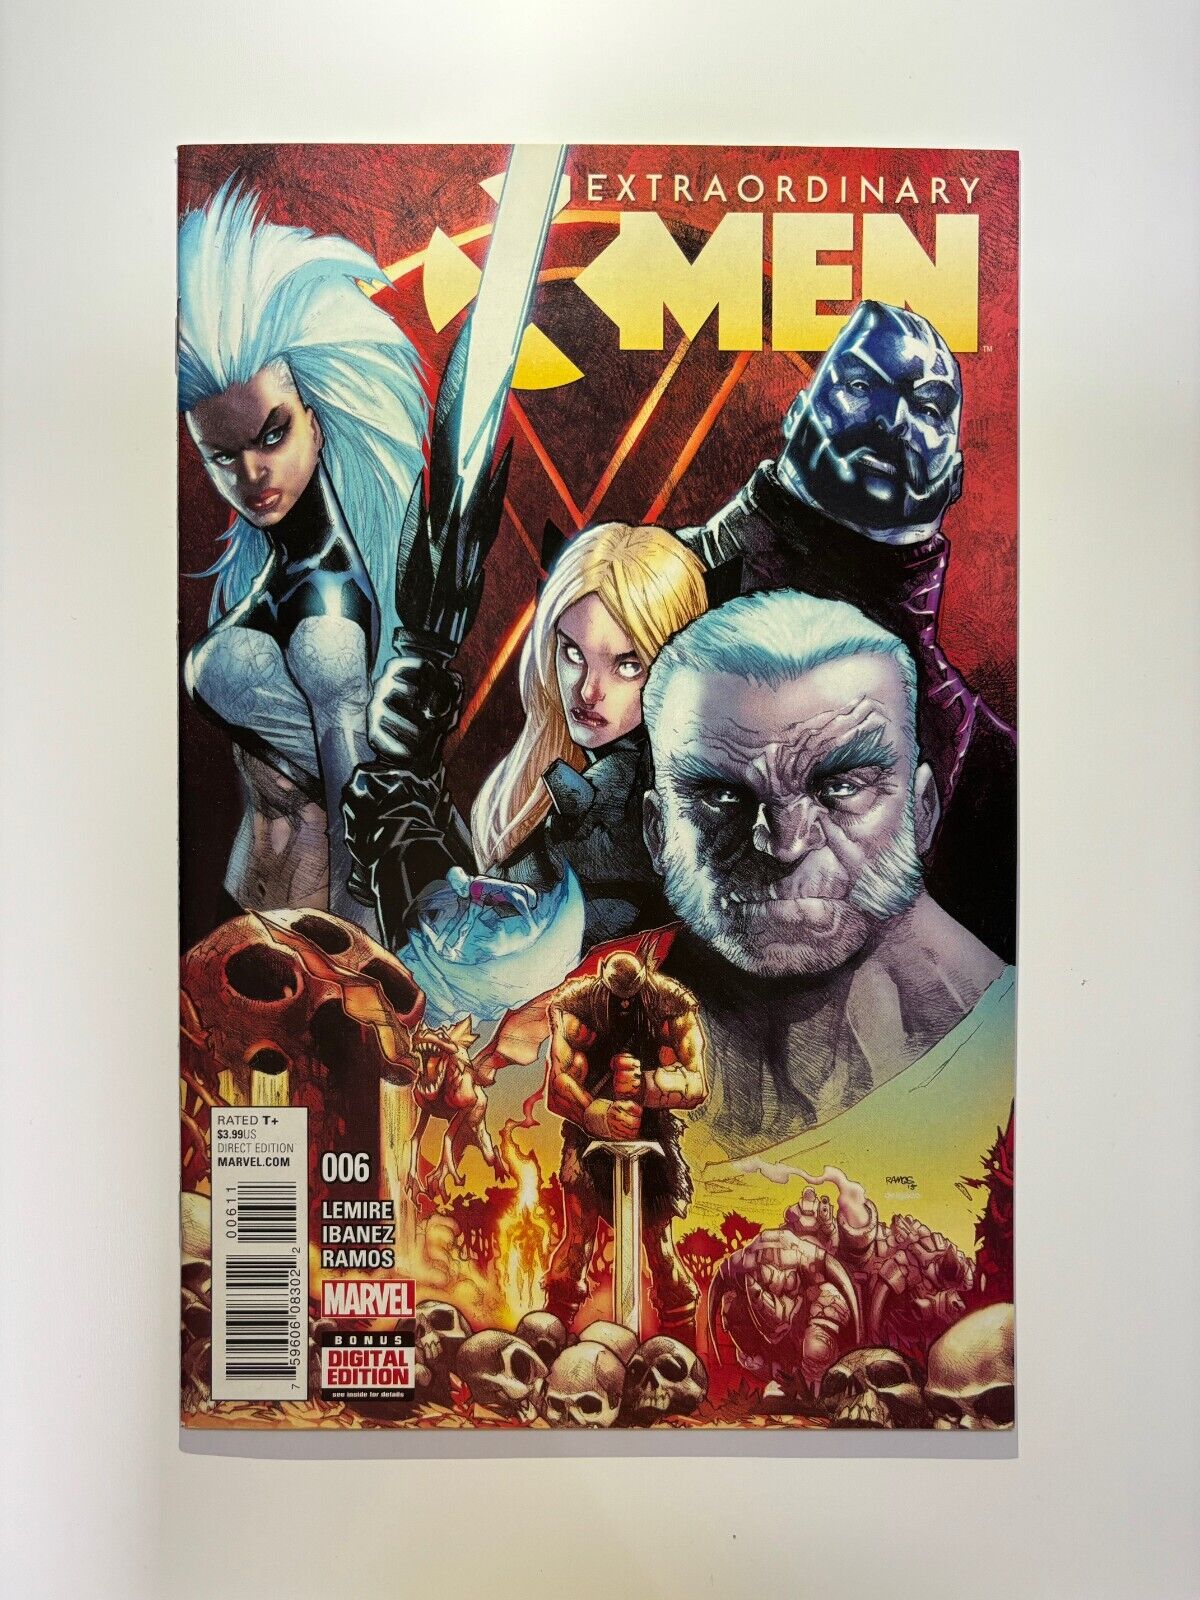 Extraordinary X-Men #6 (Marvel Comics, Lemire, Ramos, March 2016) NM